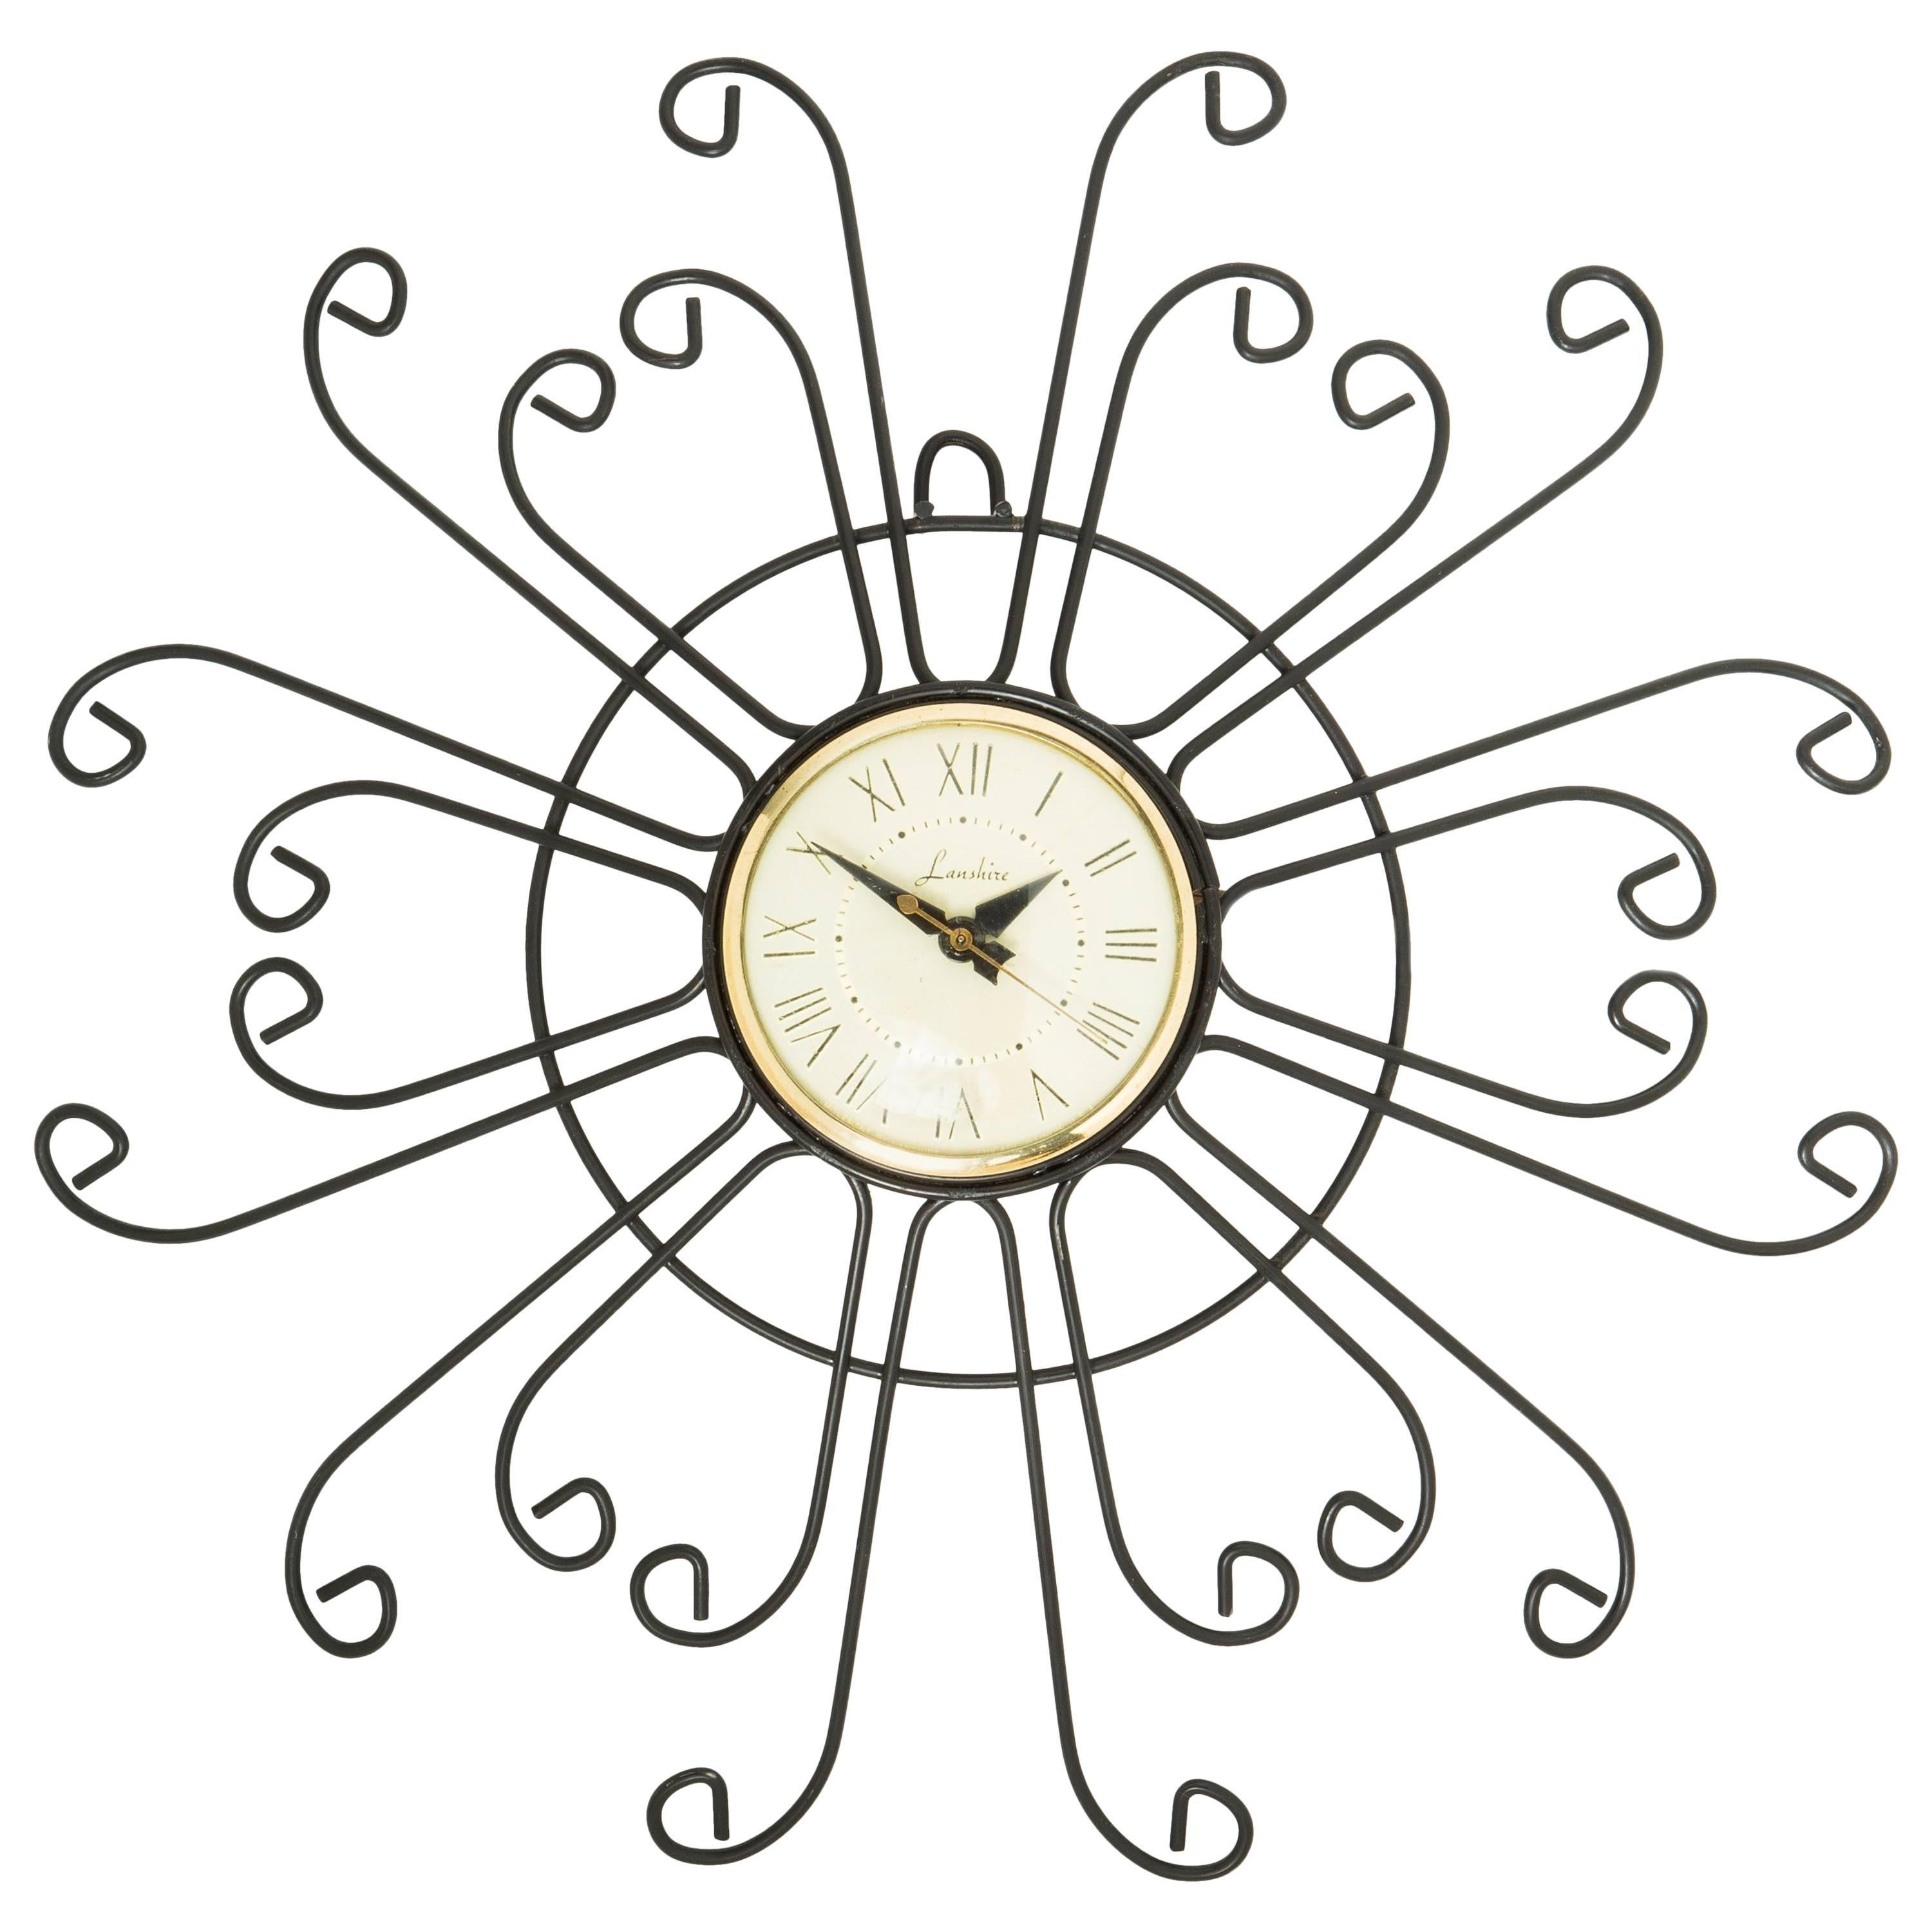 Lanshire Curled Iron Sunburst Clock, circa 1950